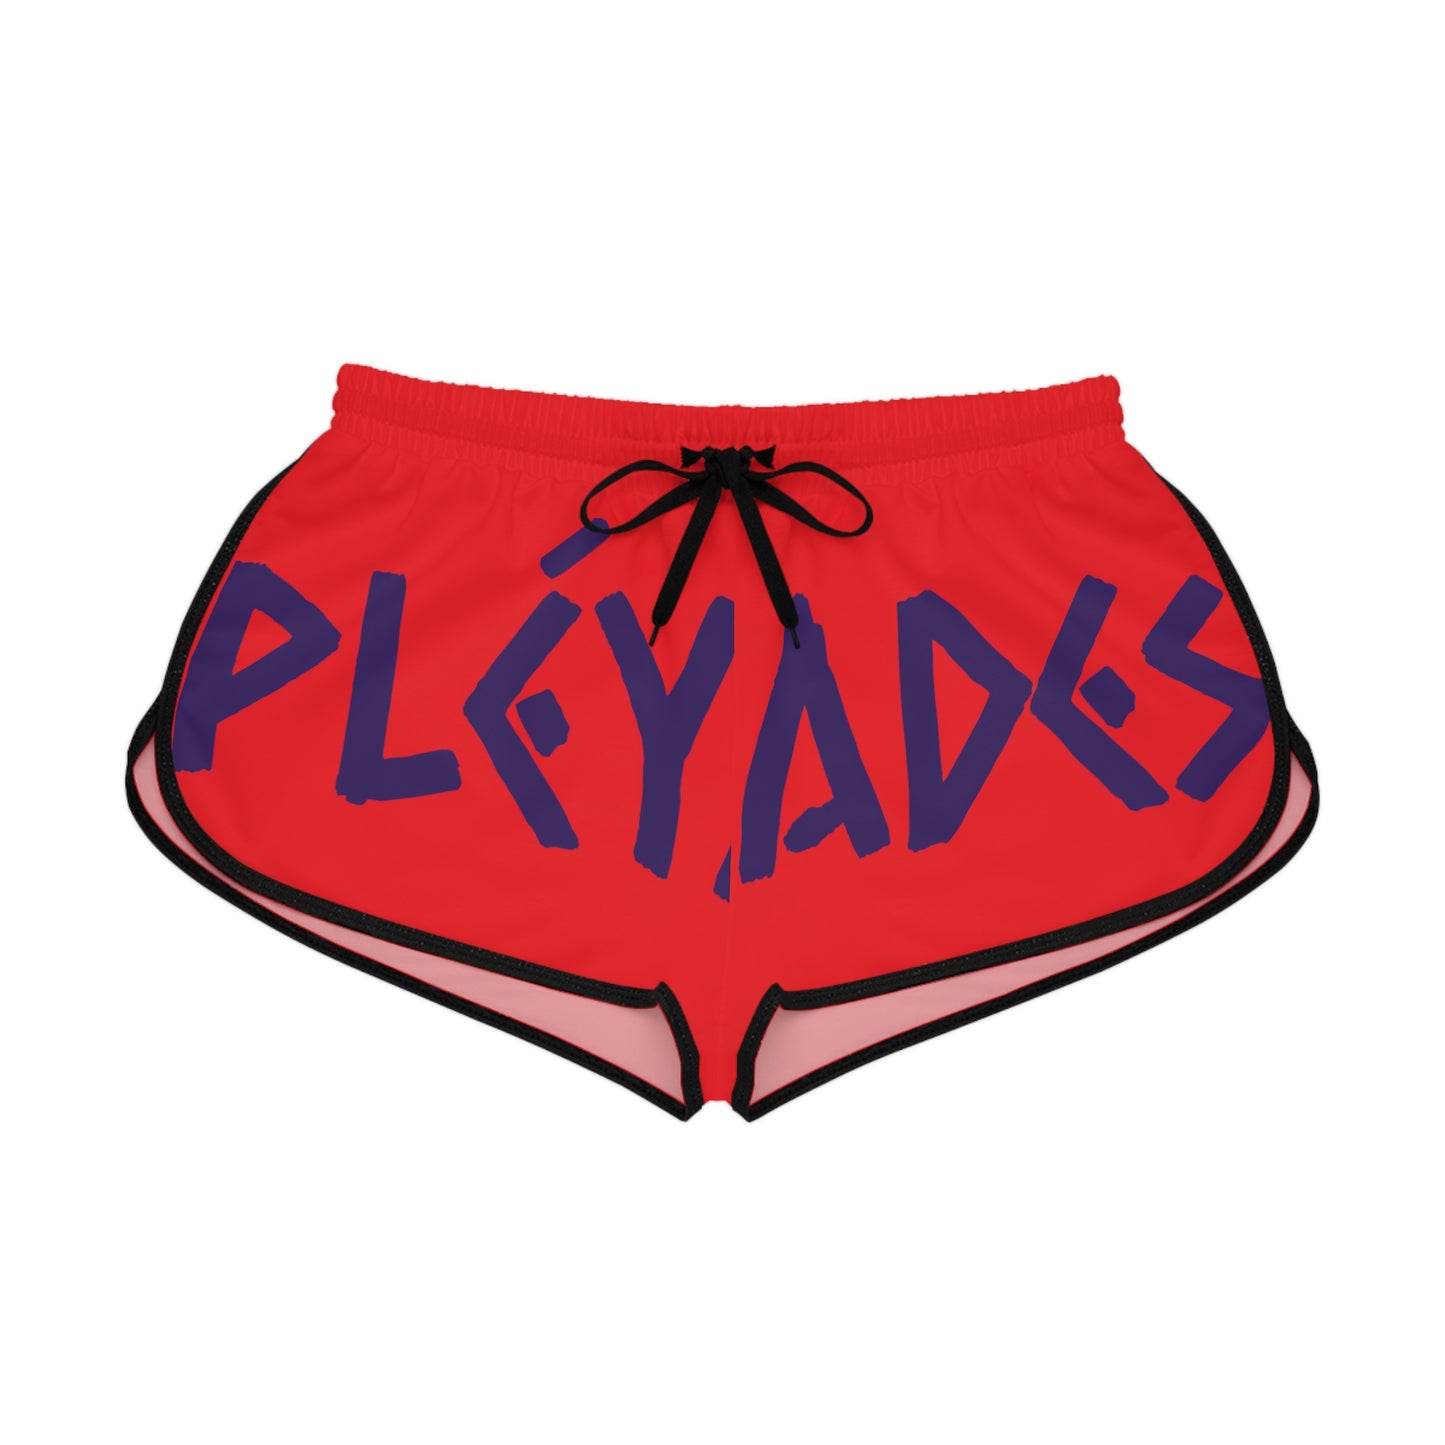 Red Pléyades Women's Relaxed Shorts